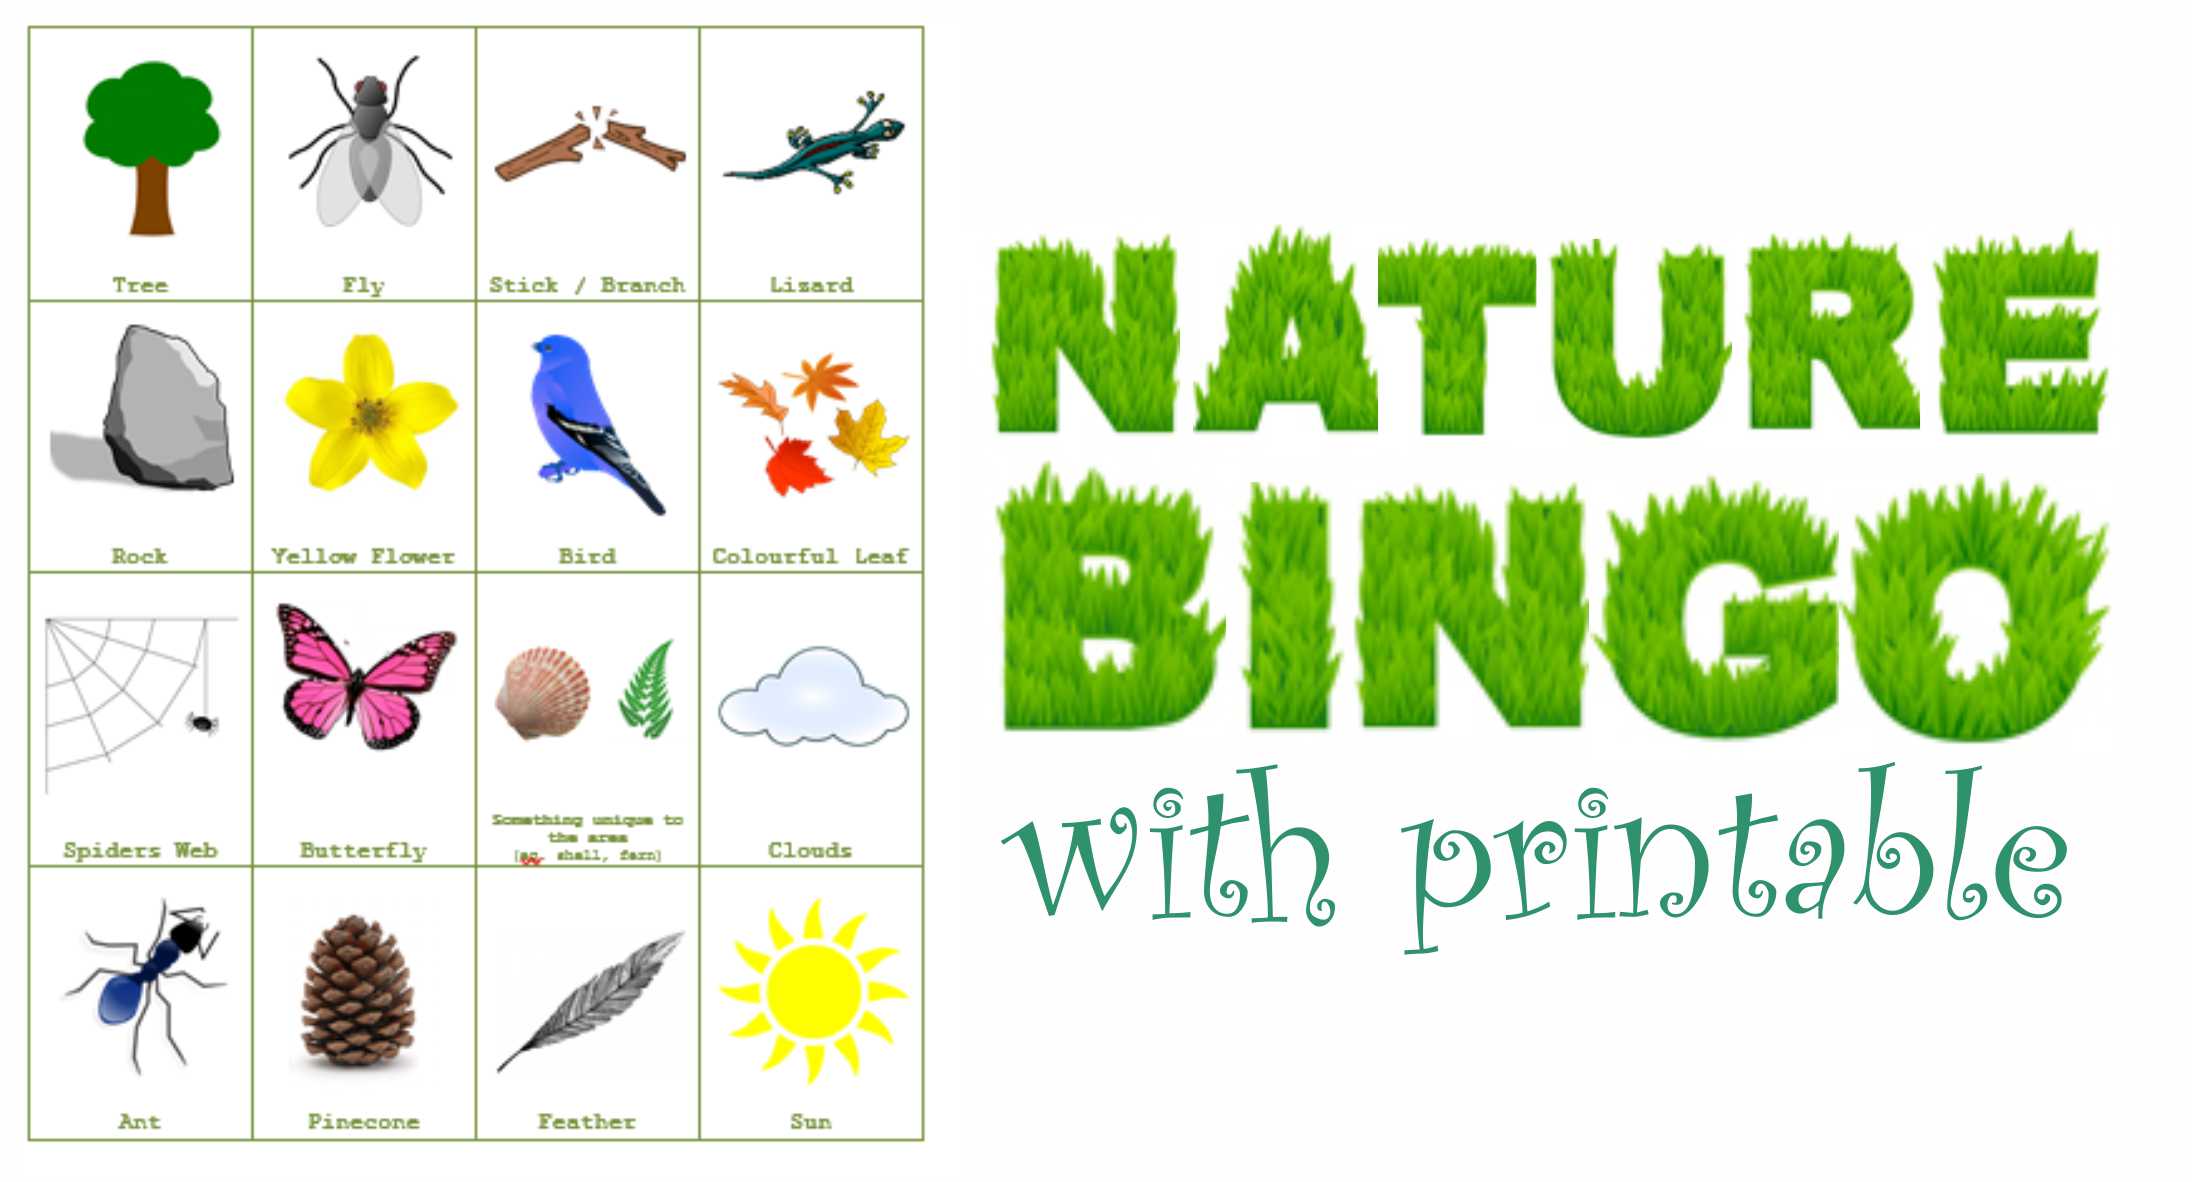 nature bingo template